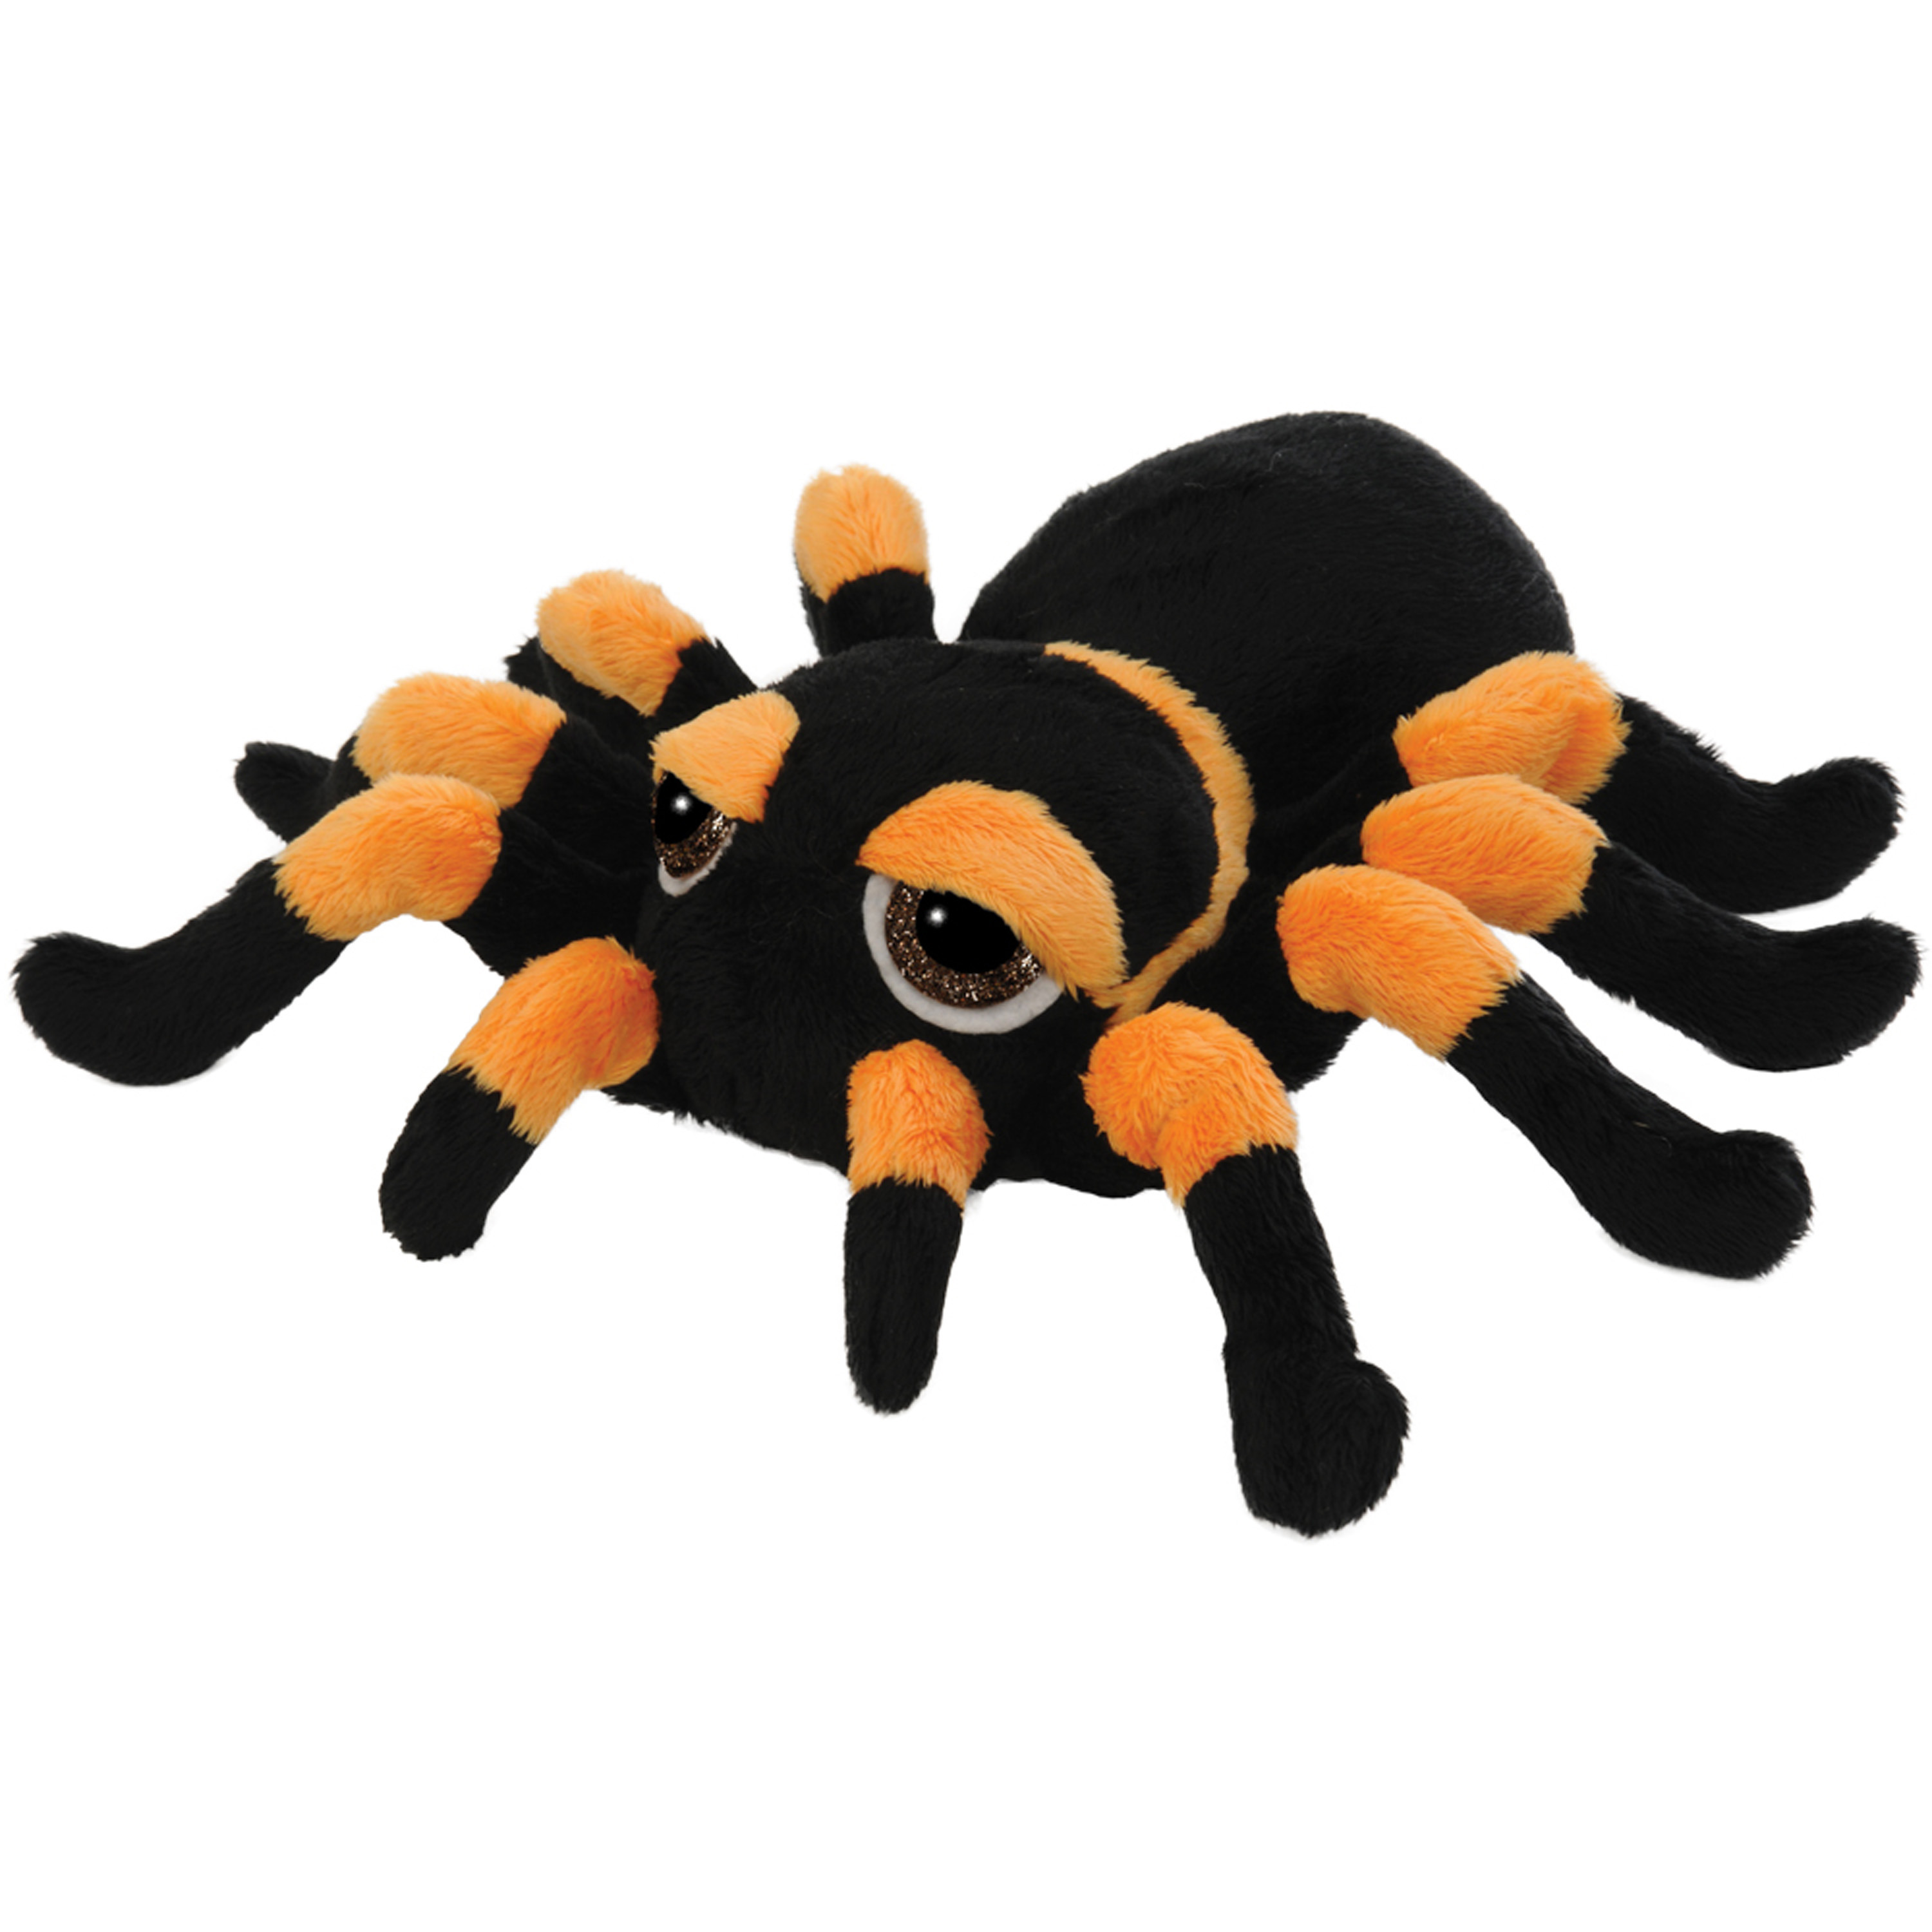 Suki Gifts Pluche knuffel spin - tarantula - zwart/oranje - 33 cm - speelgoed -